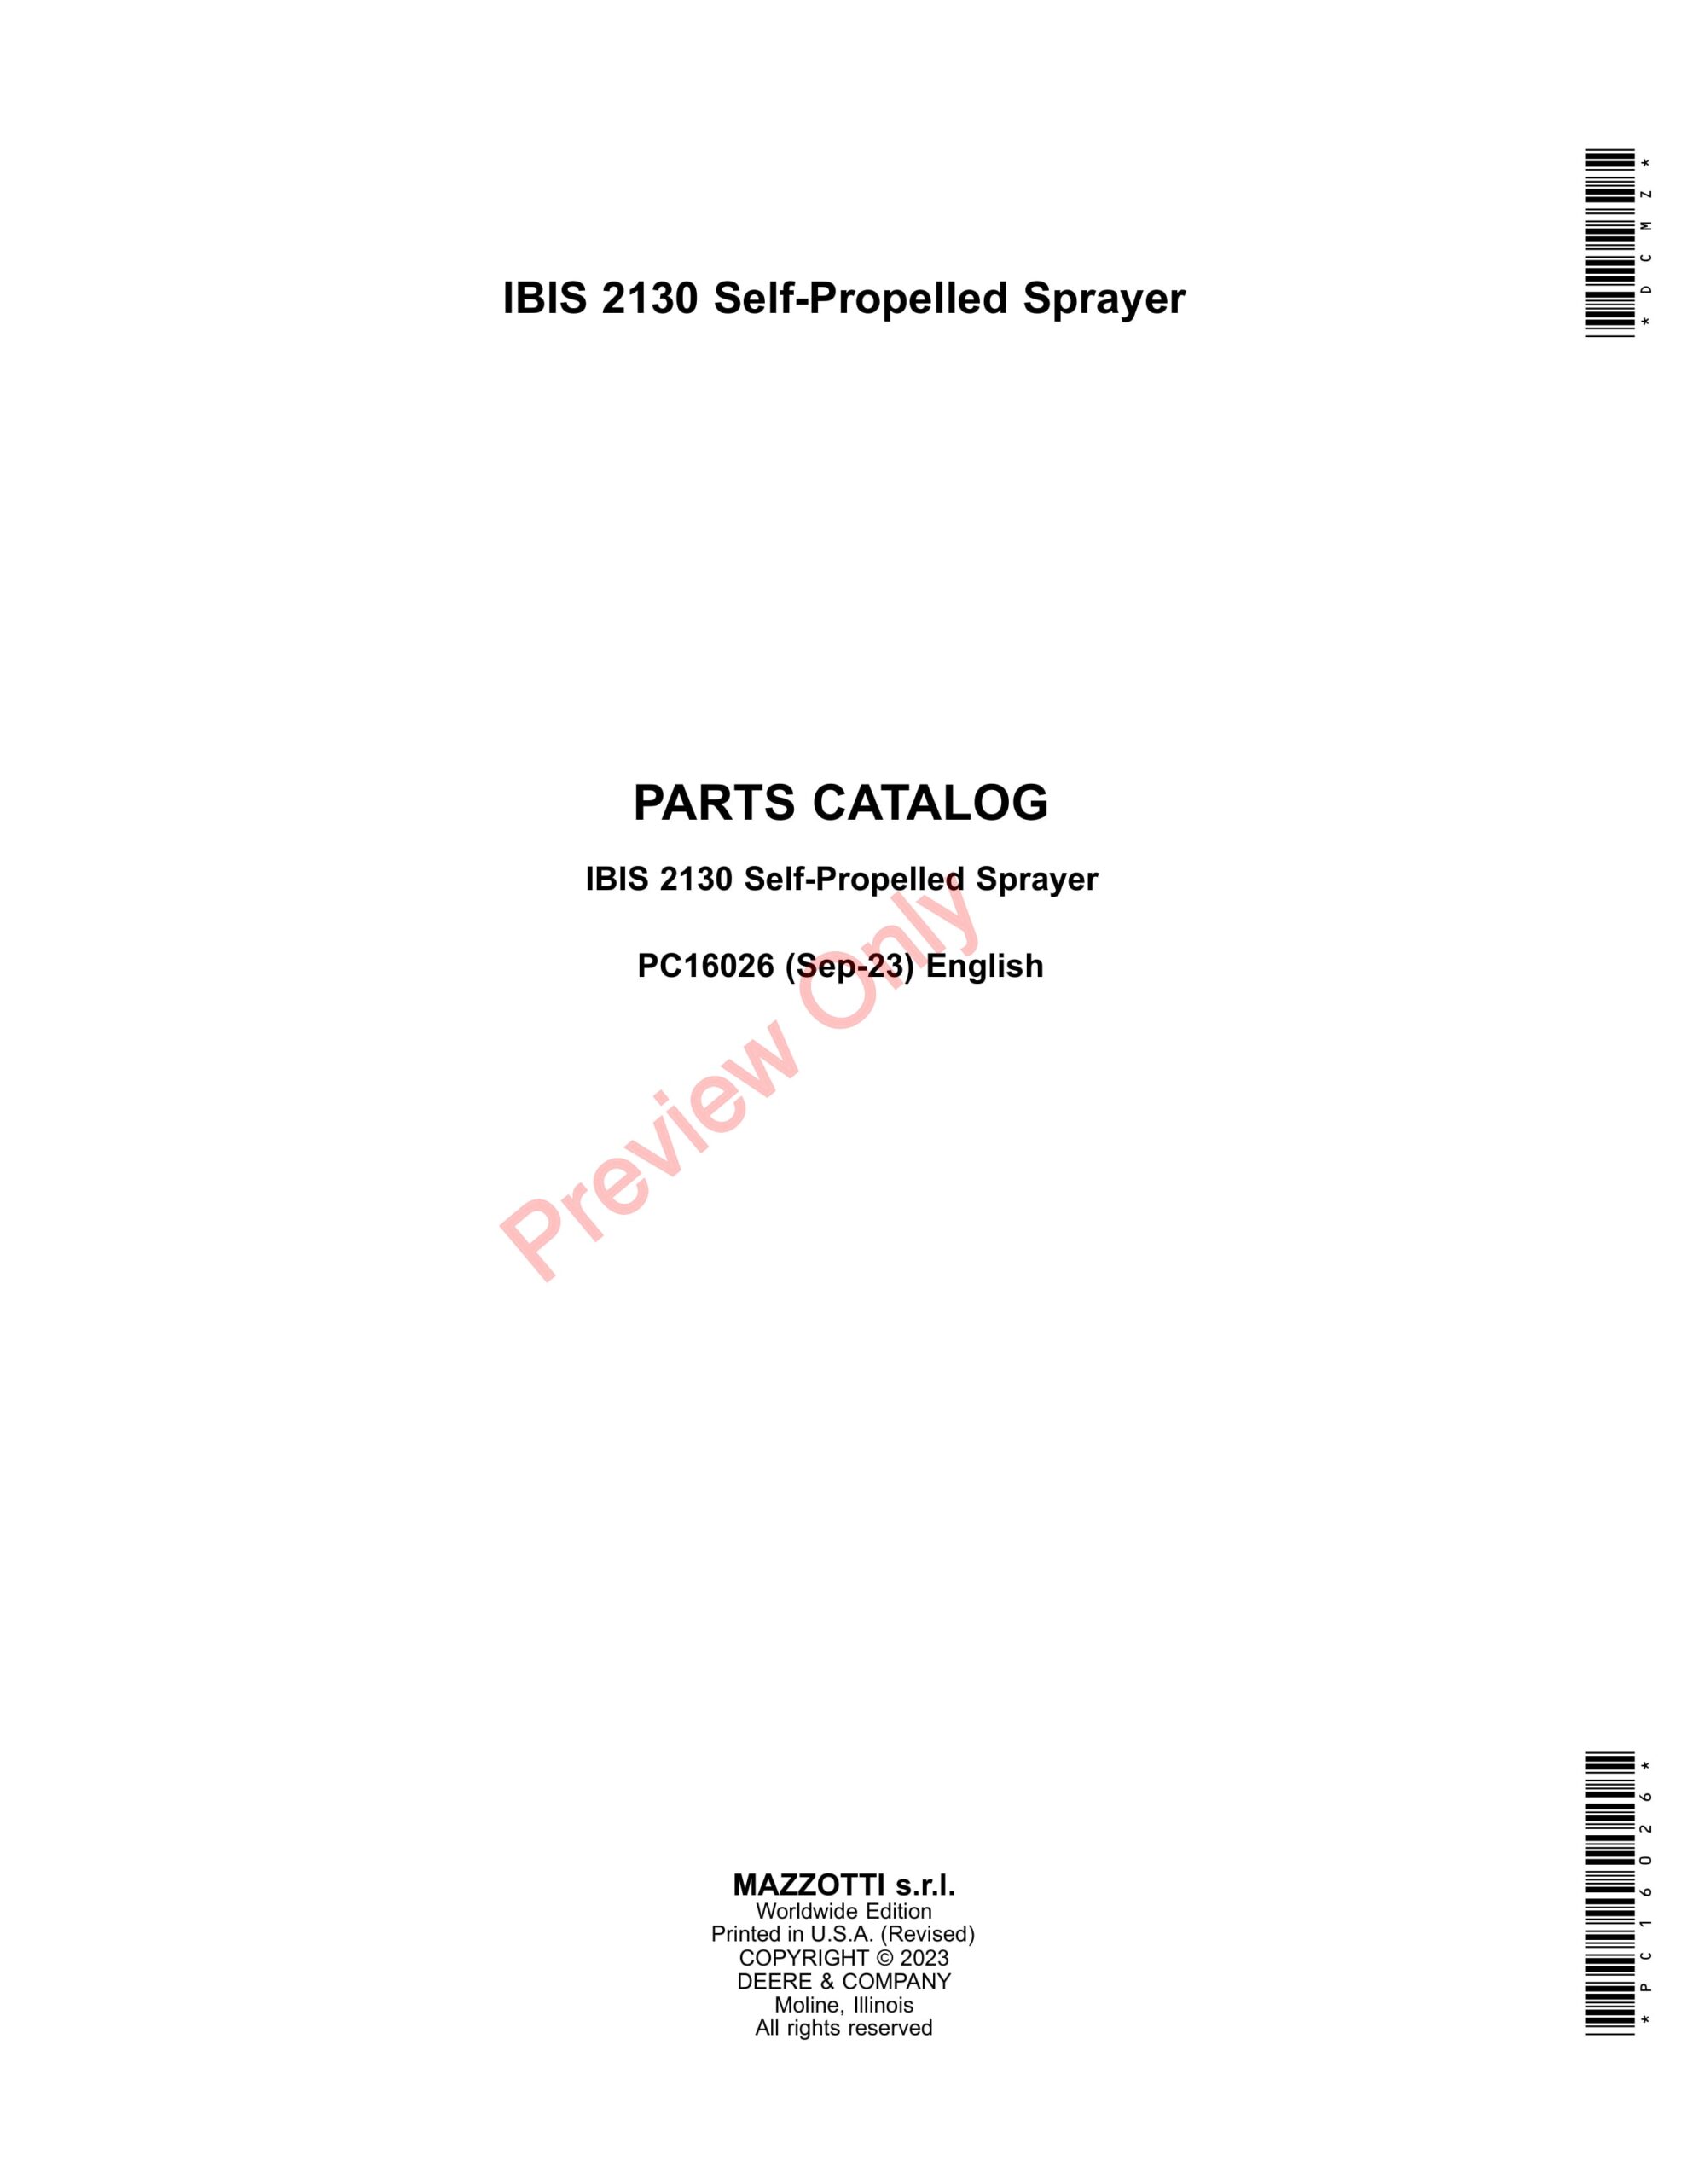 John Deere IBIS 2130 Self-Propelled Sprayer Parts Catalog PC16026 30SEP23-1